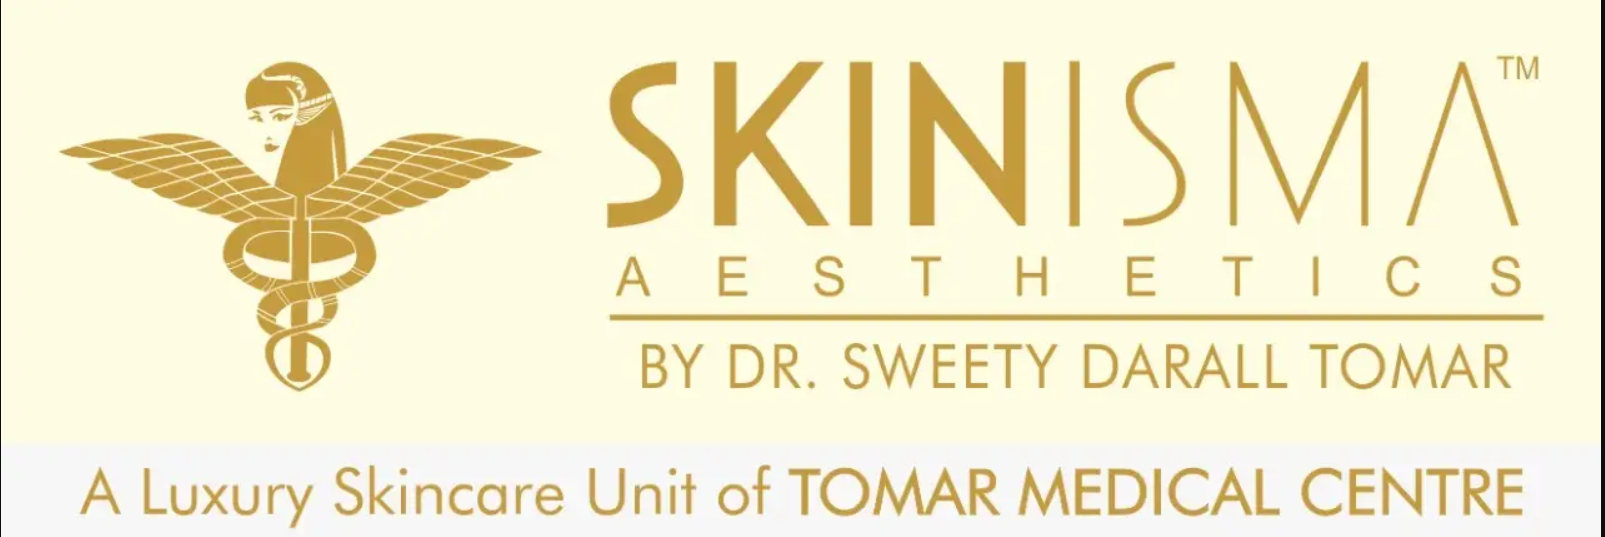 SKINISMA AESTHETICS By Dr Sweety Darall Tomar - Best Dermatologist in Delhi | Skin Doctor in Delhi |Skin Specialist in Delhi